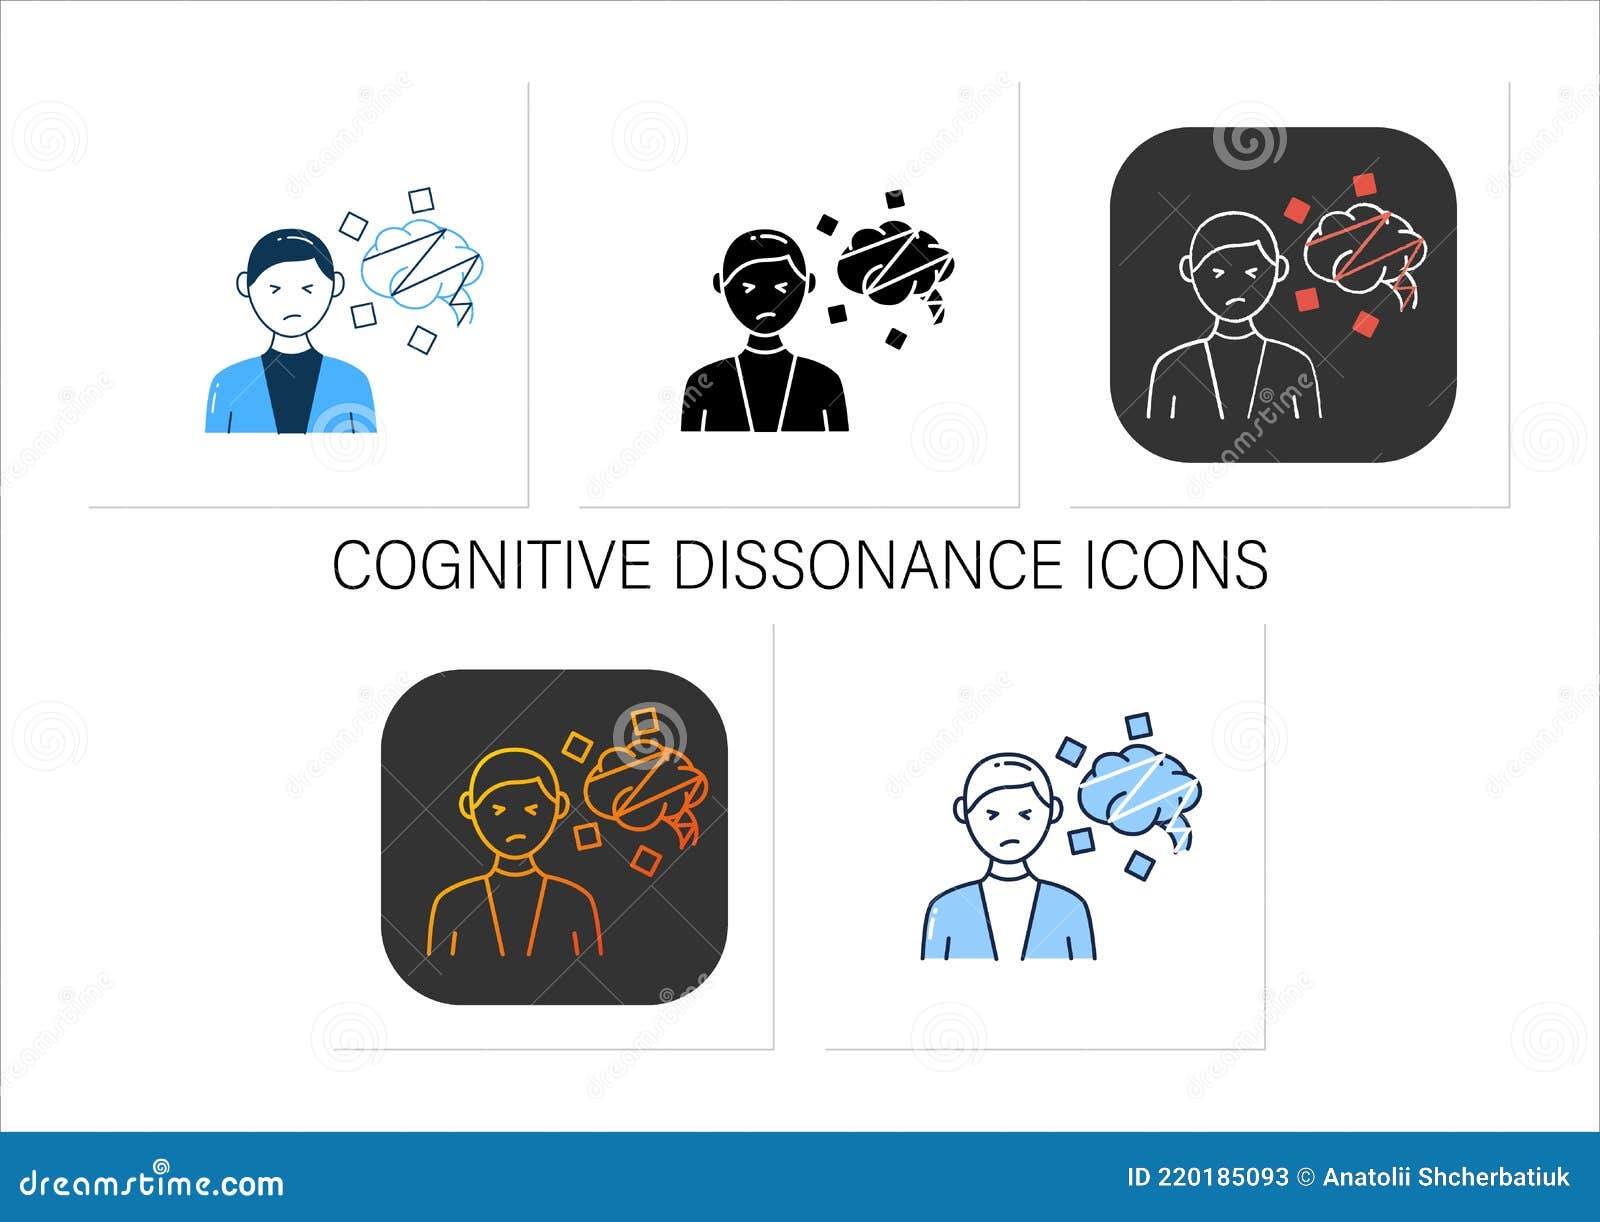 cognitive dissonance icons set